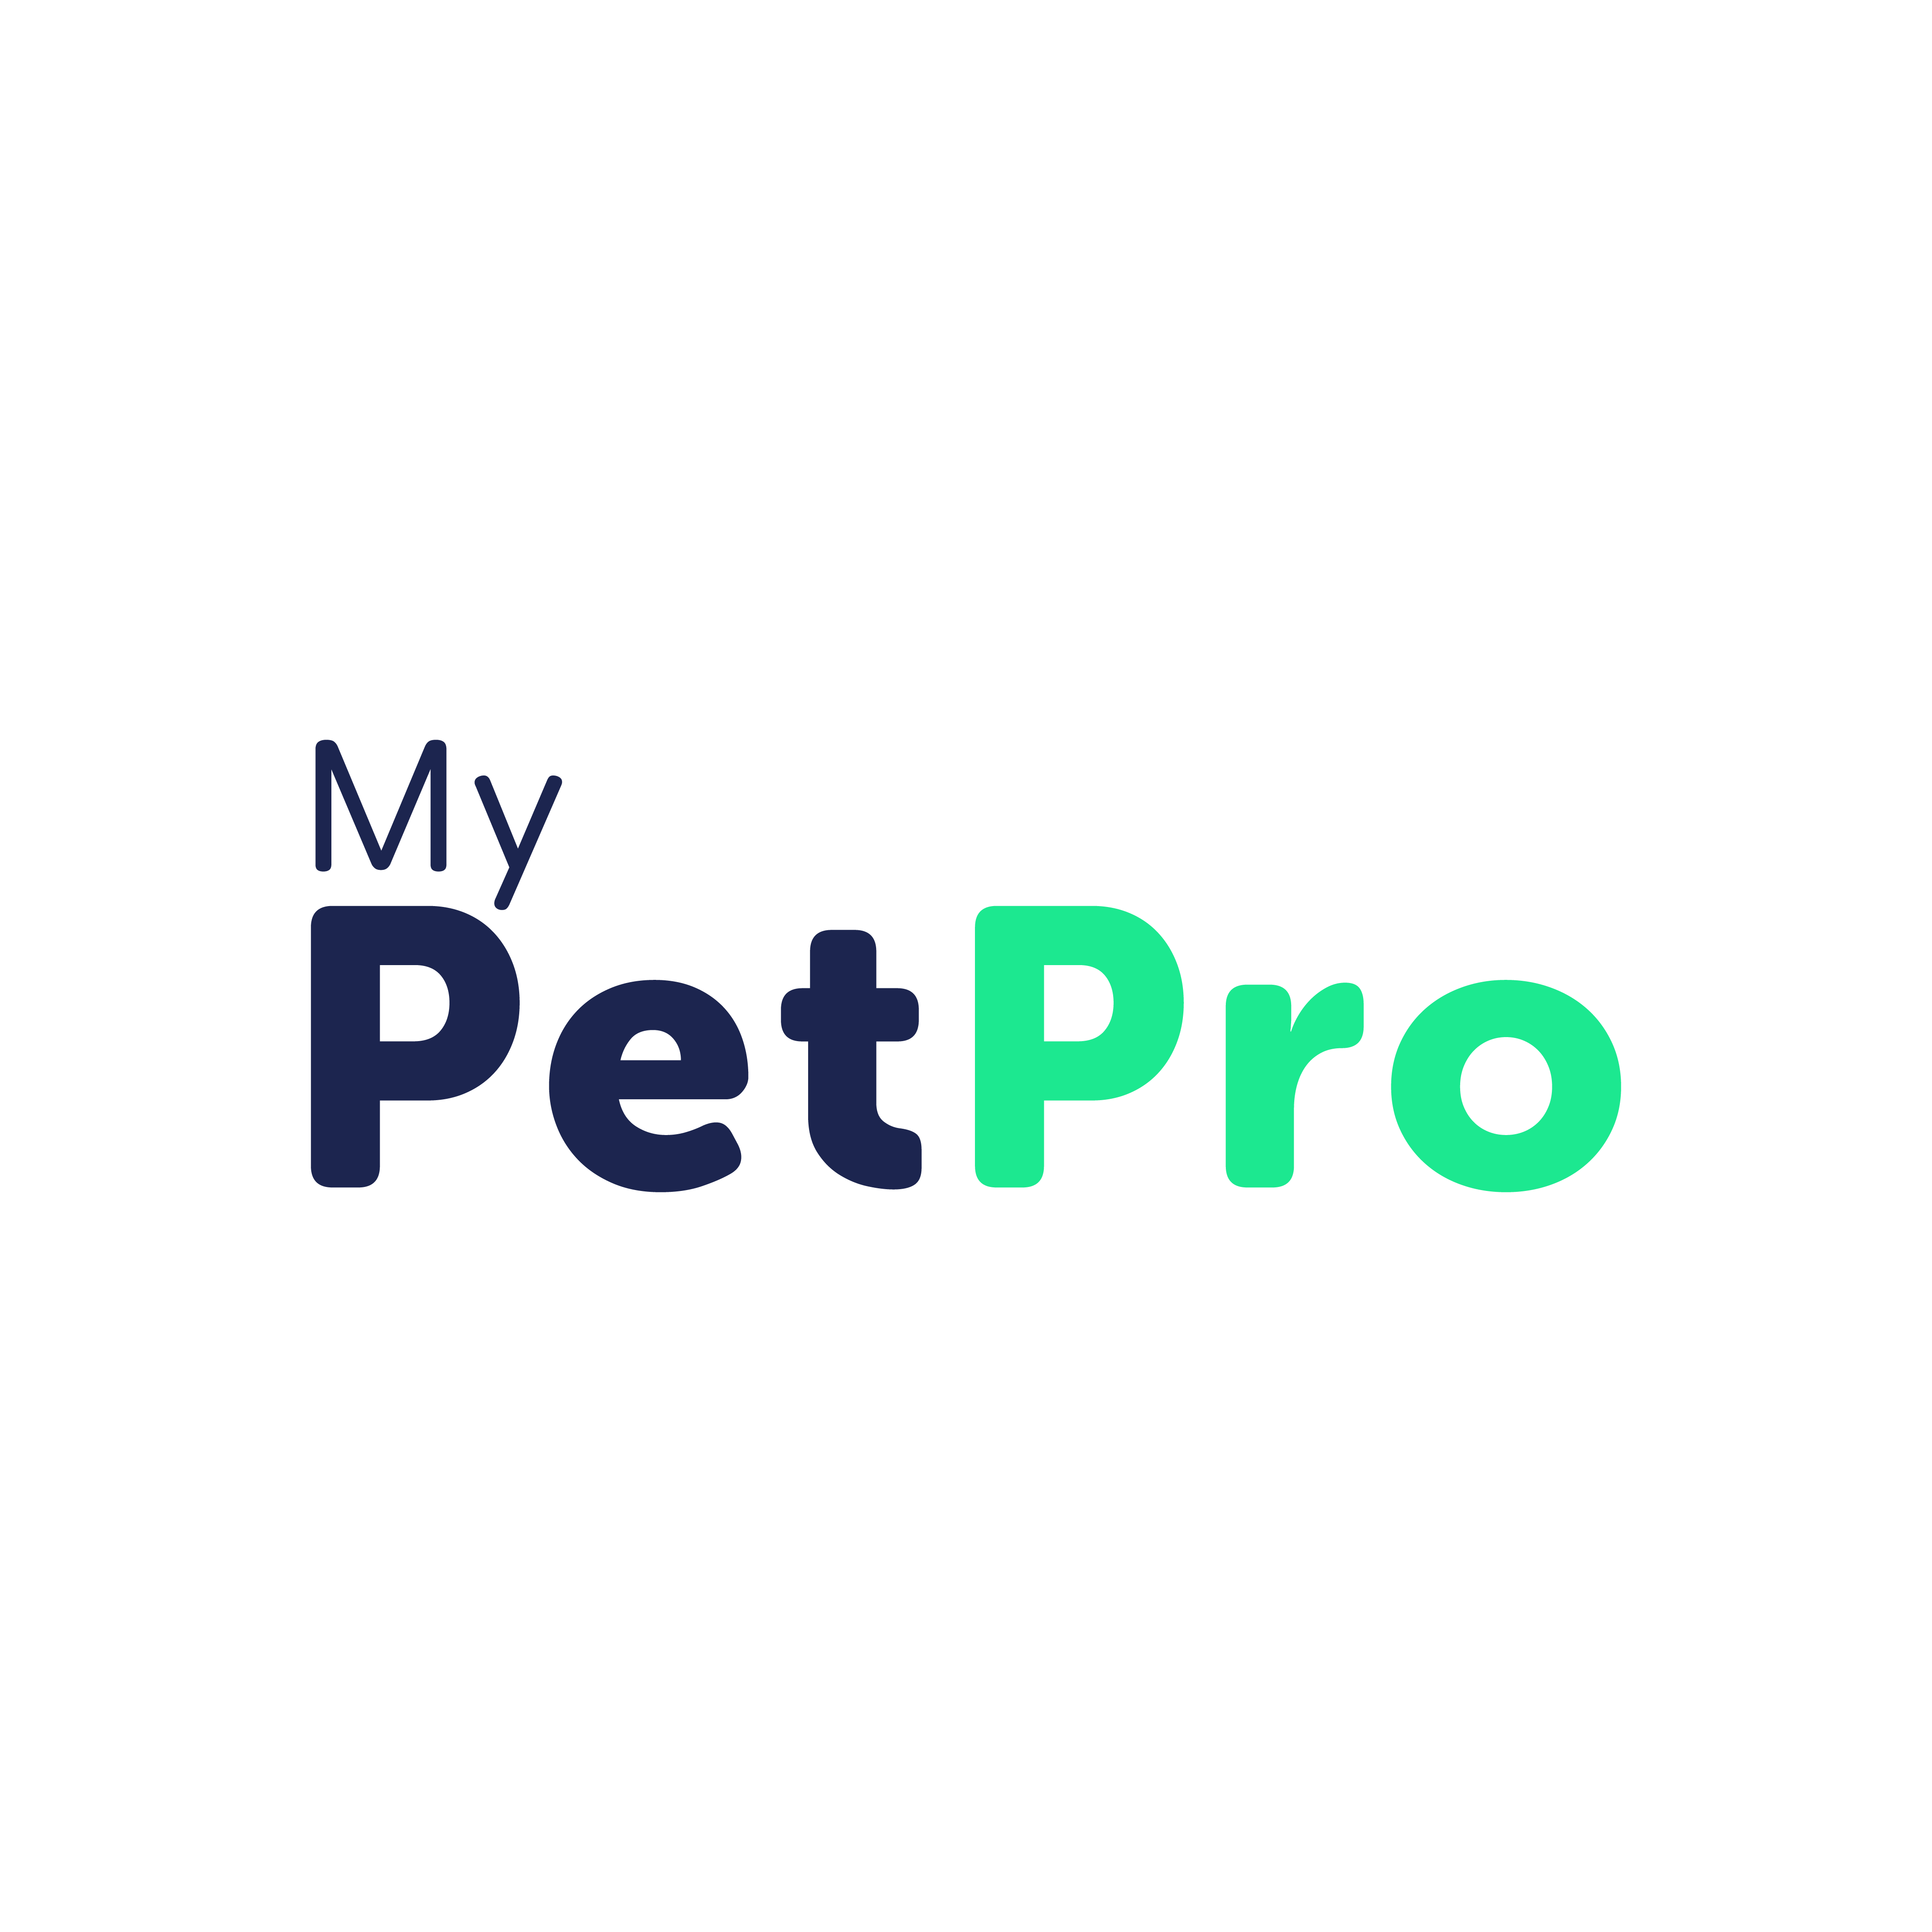 My PetPro brand identity